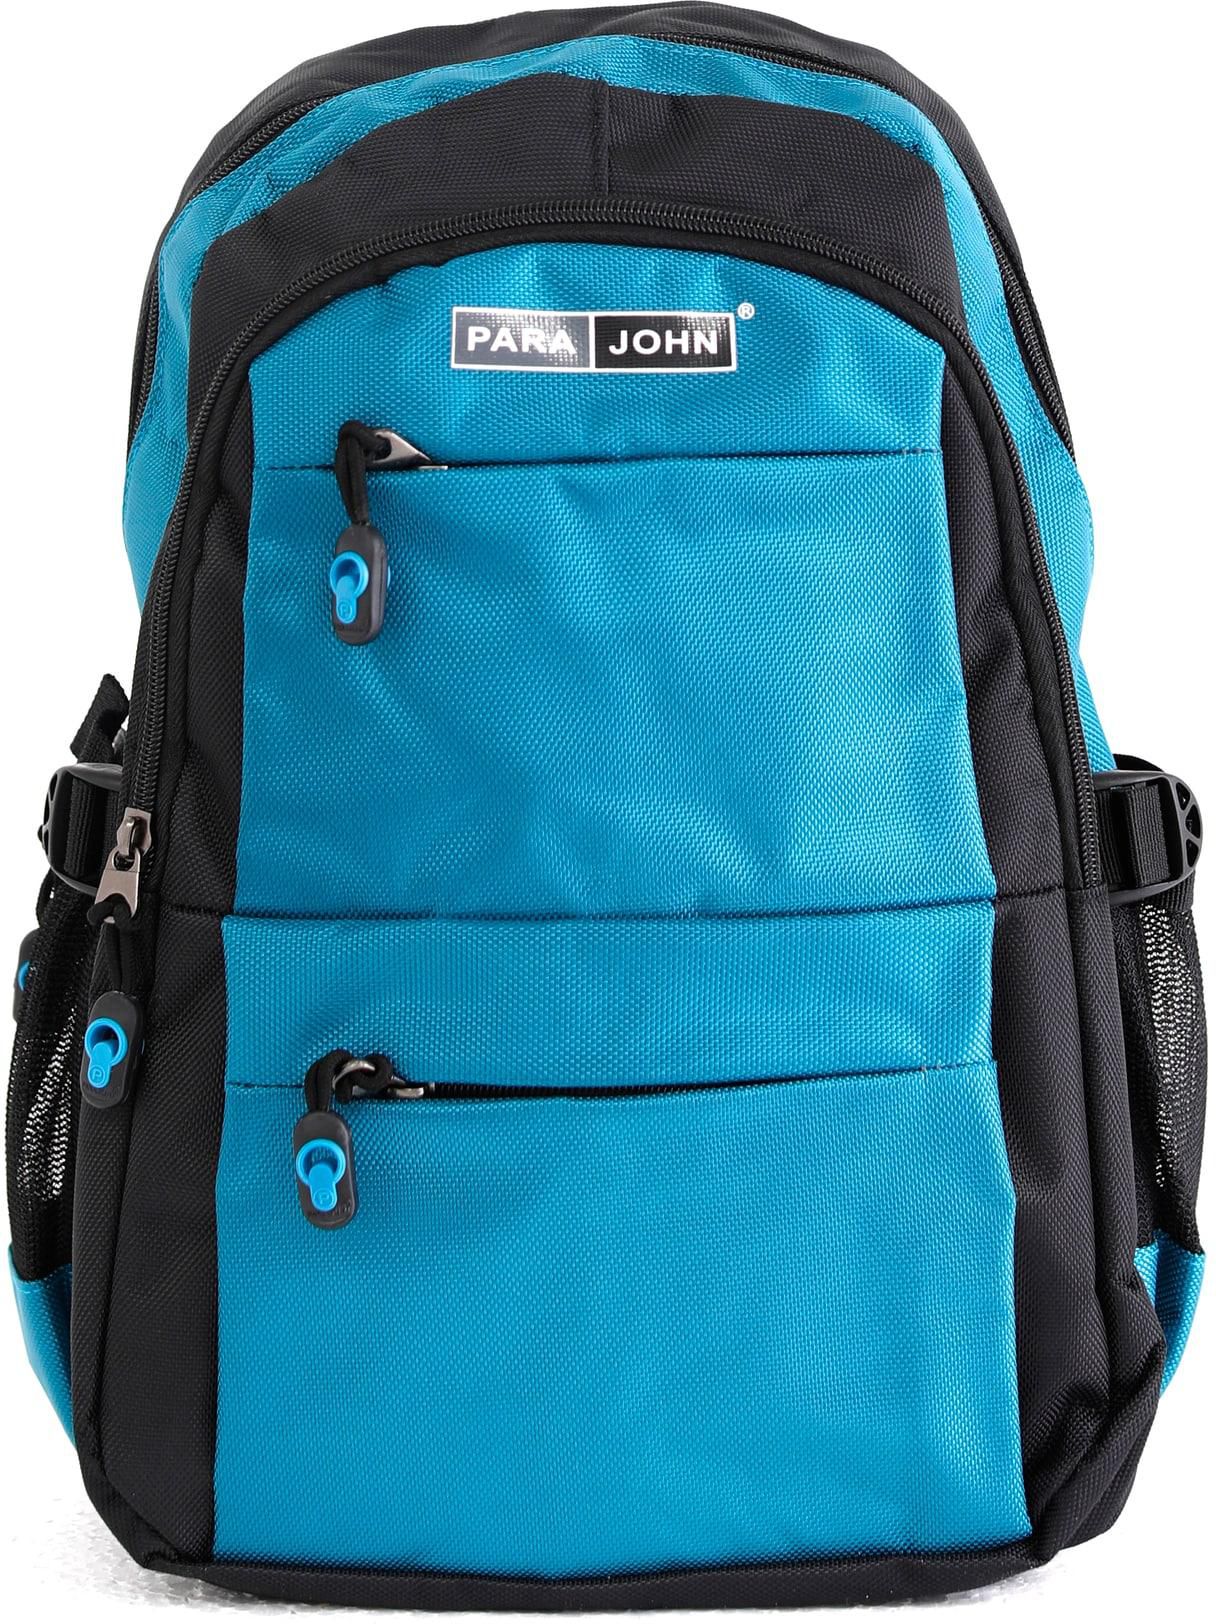 Para John Backpack For School, Travel &amp; Work, 18&#39;&#39;- Unisex Adults&#39; Backpack/Rucksack - College Casual Daypacks Rucksack Travel Bag - Lightweight Casual Work Rucksack